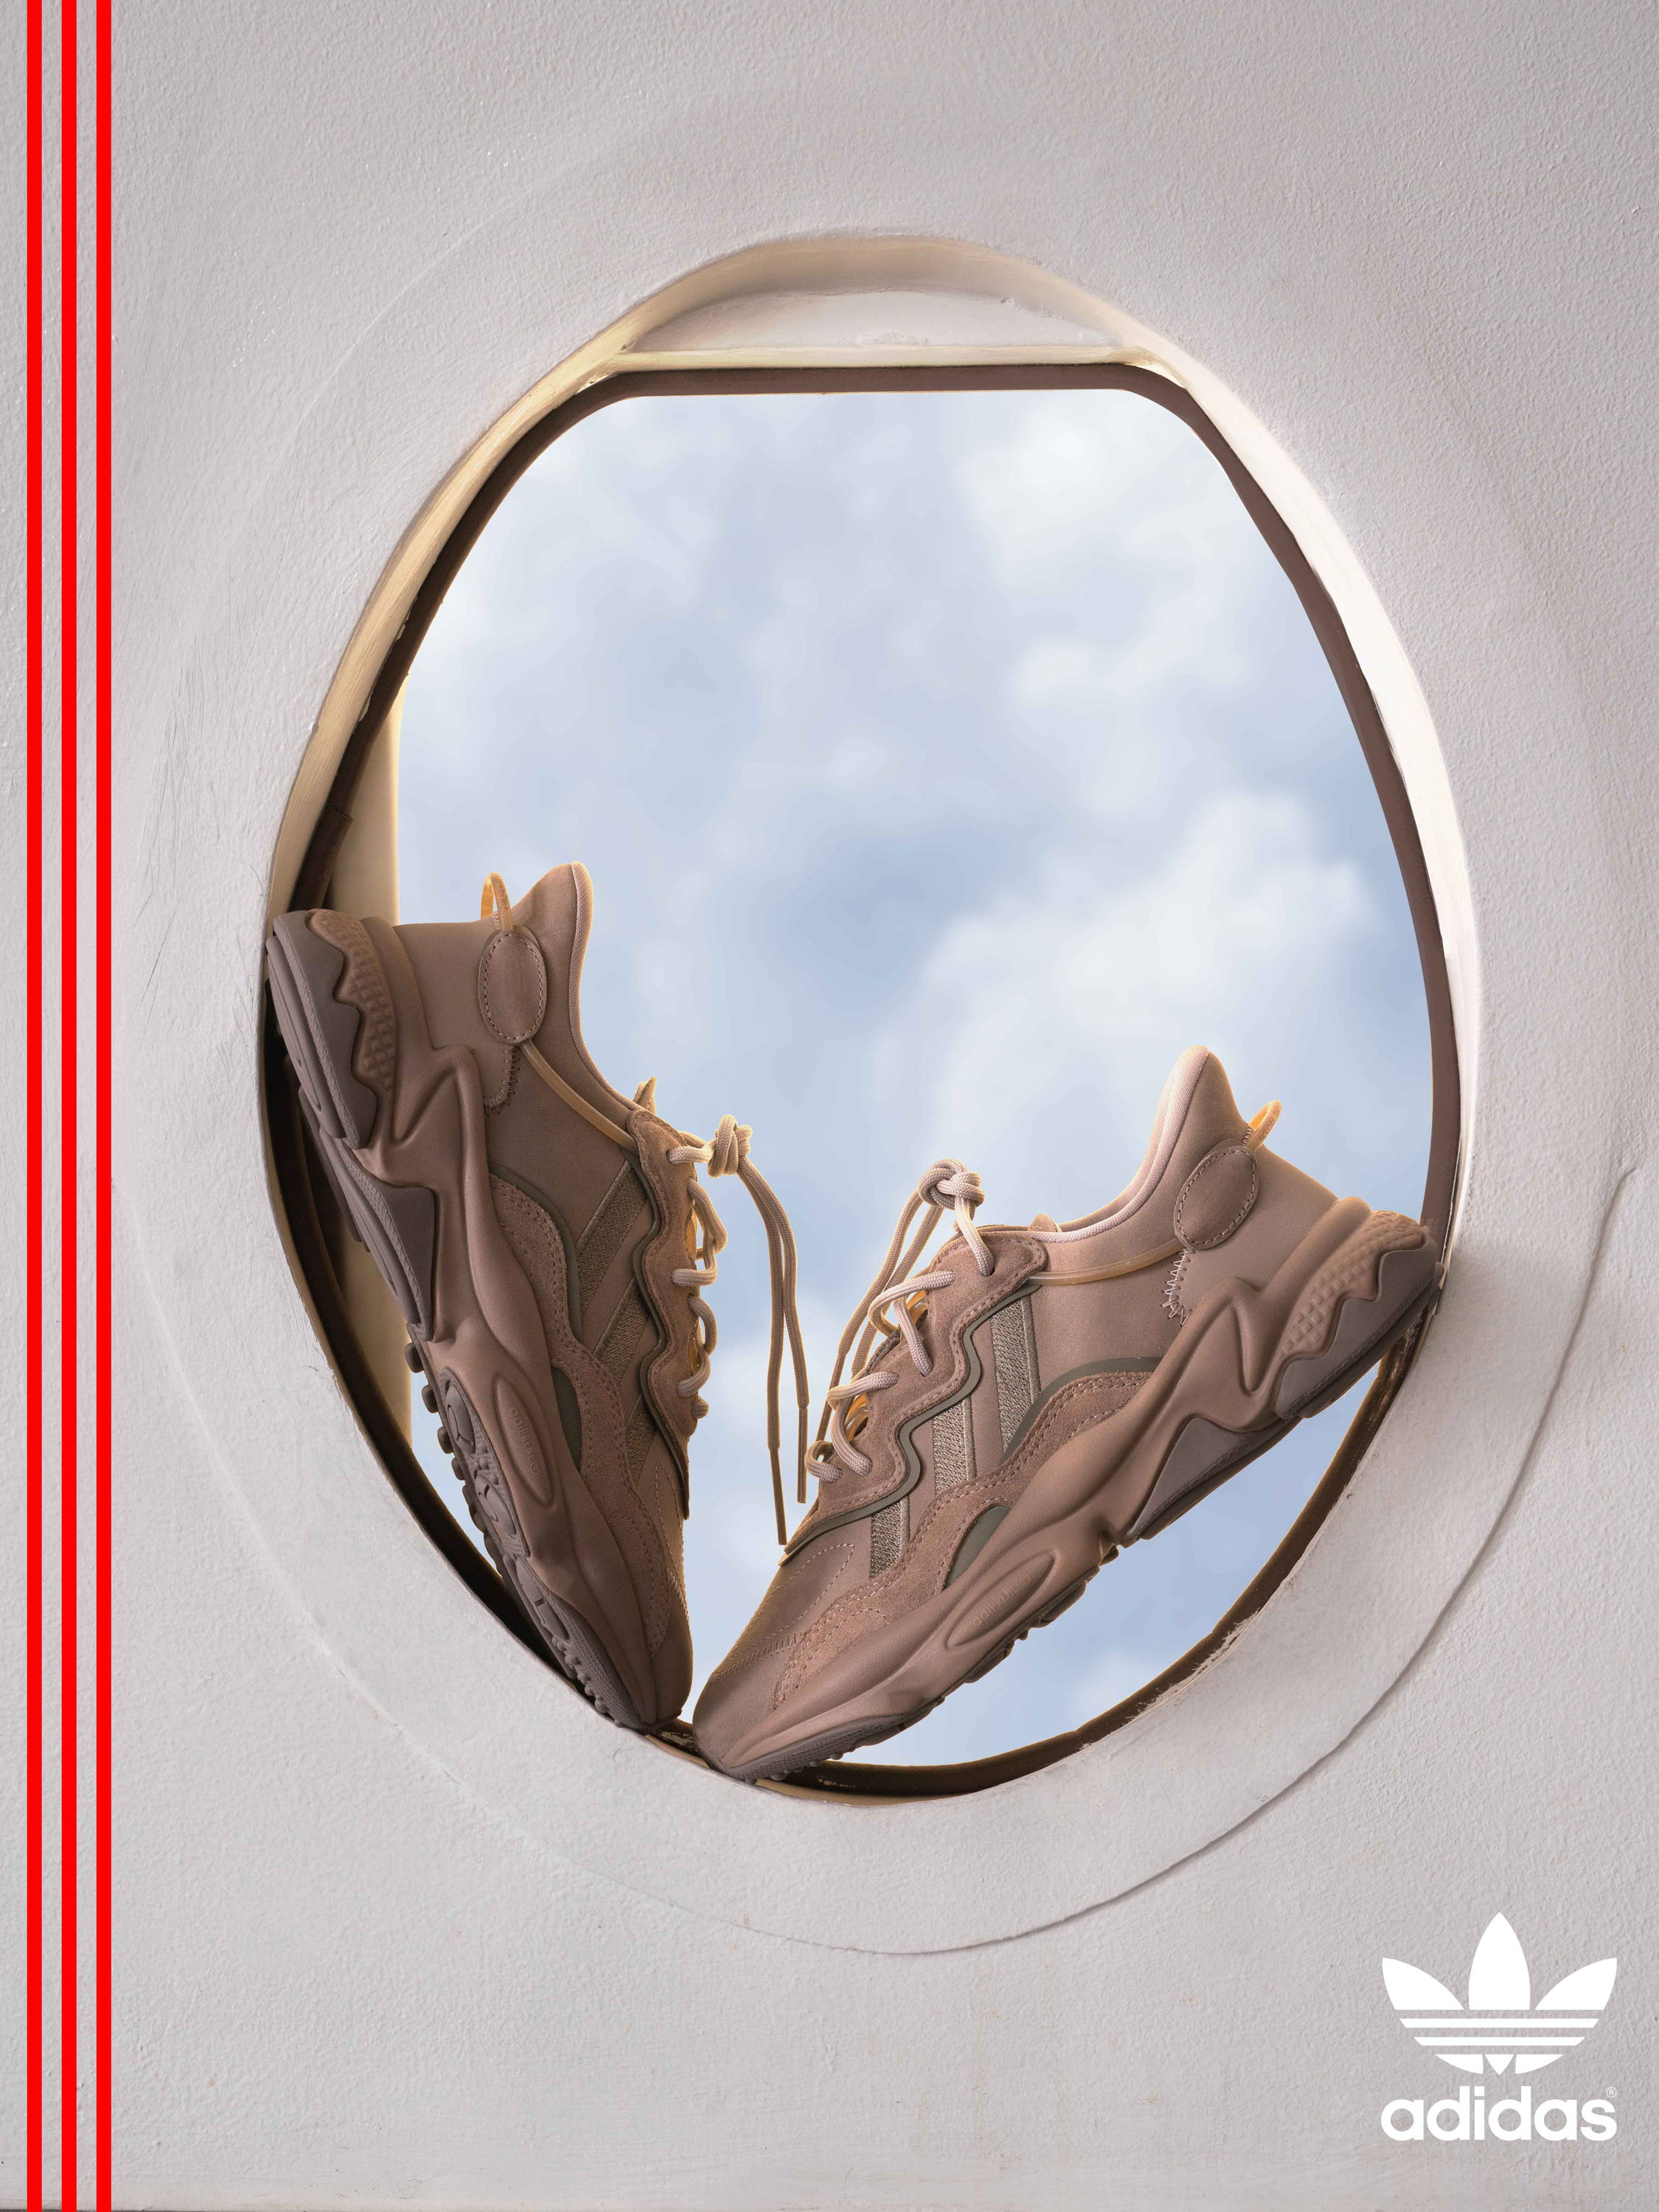 adidas ozweego in airplane window